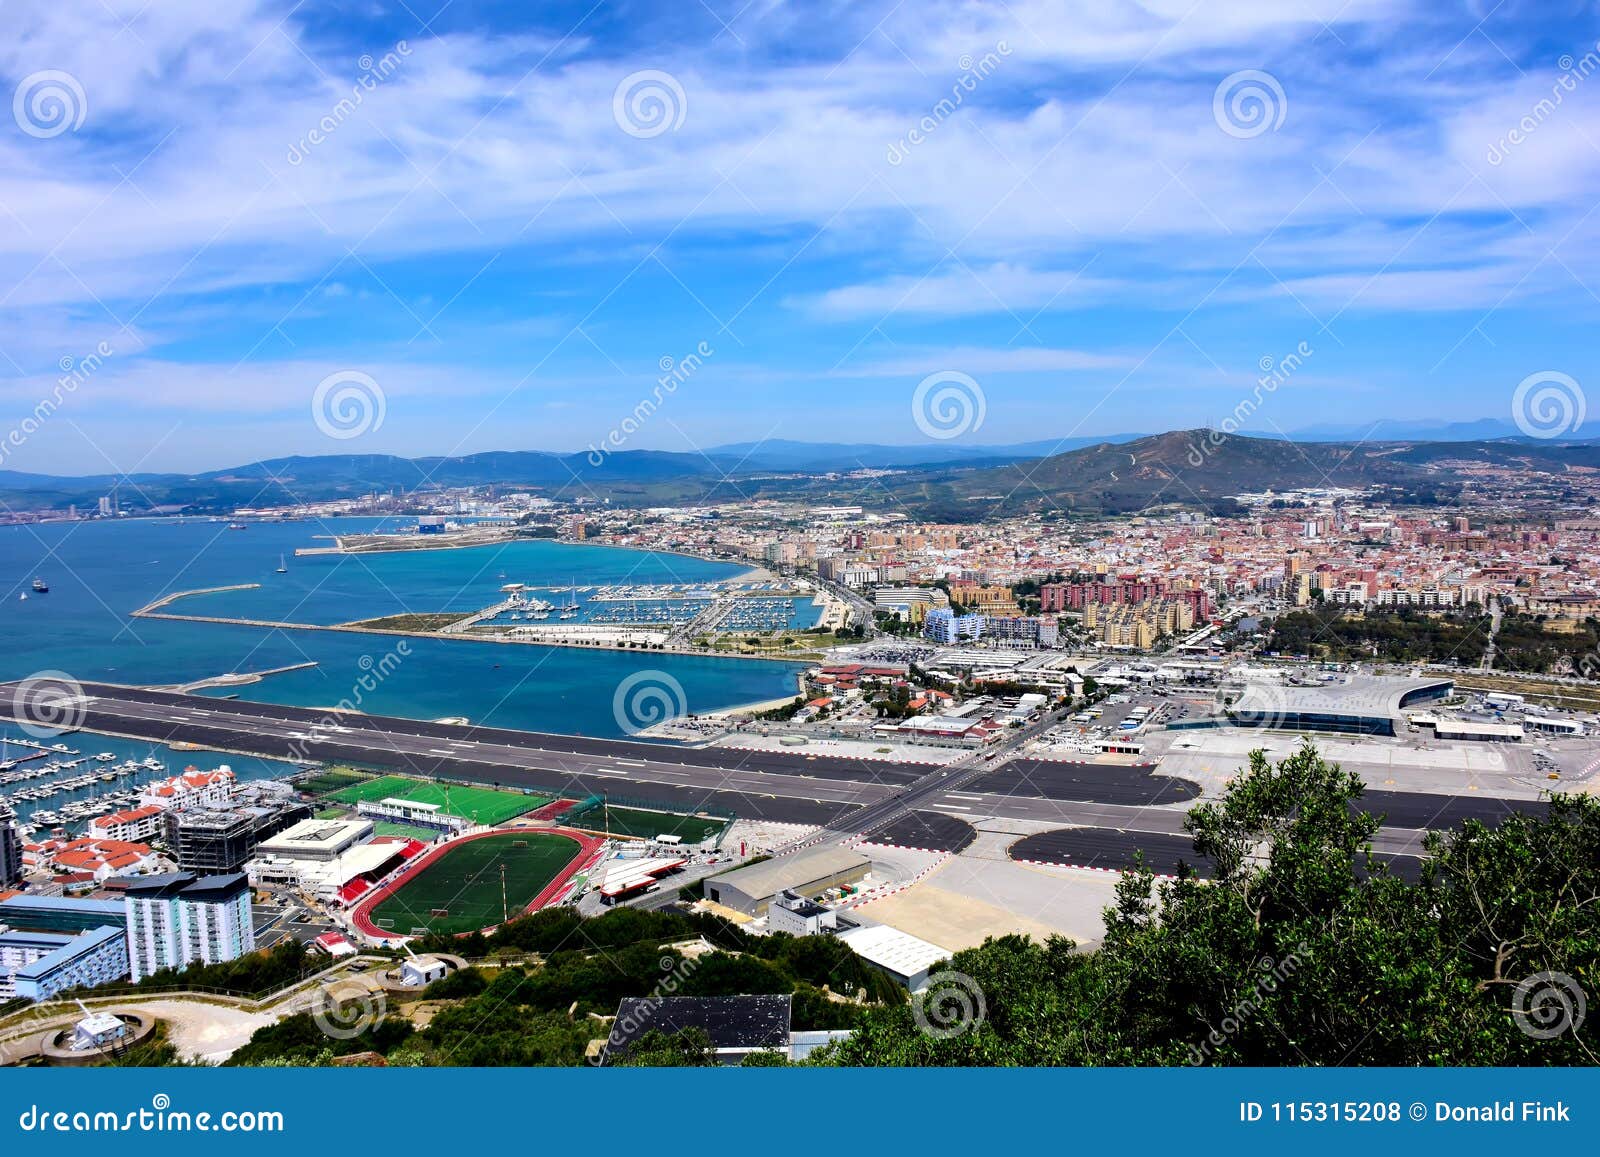 view of gibraltar international airport